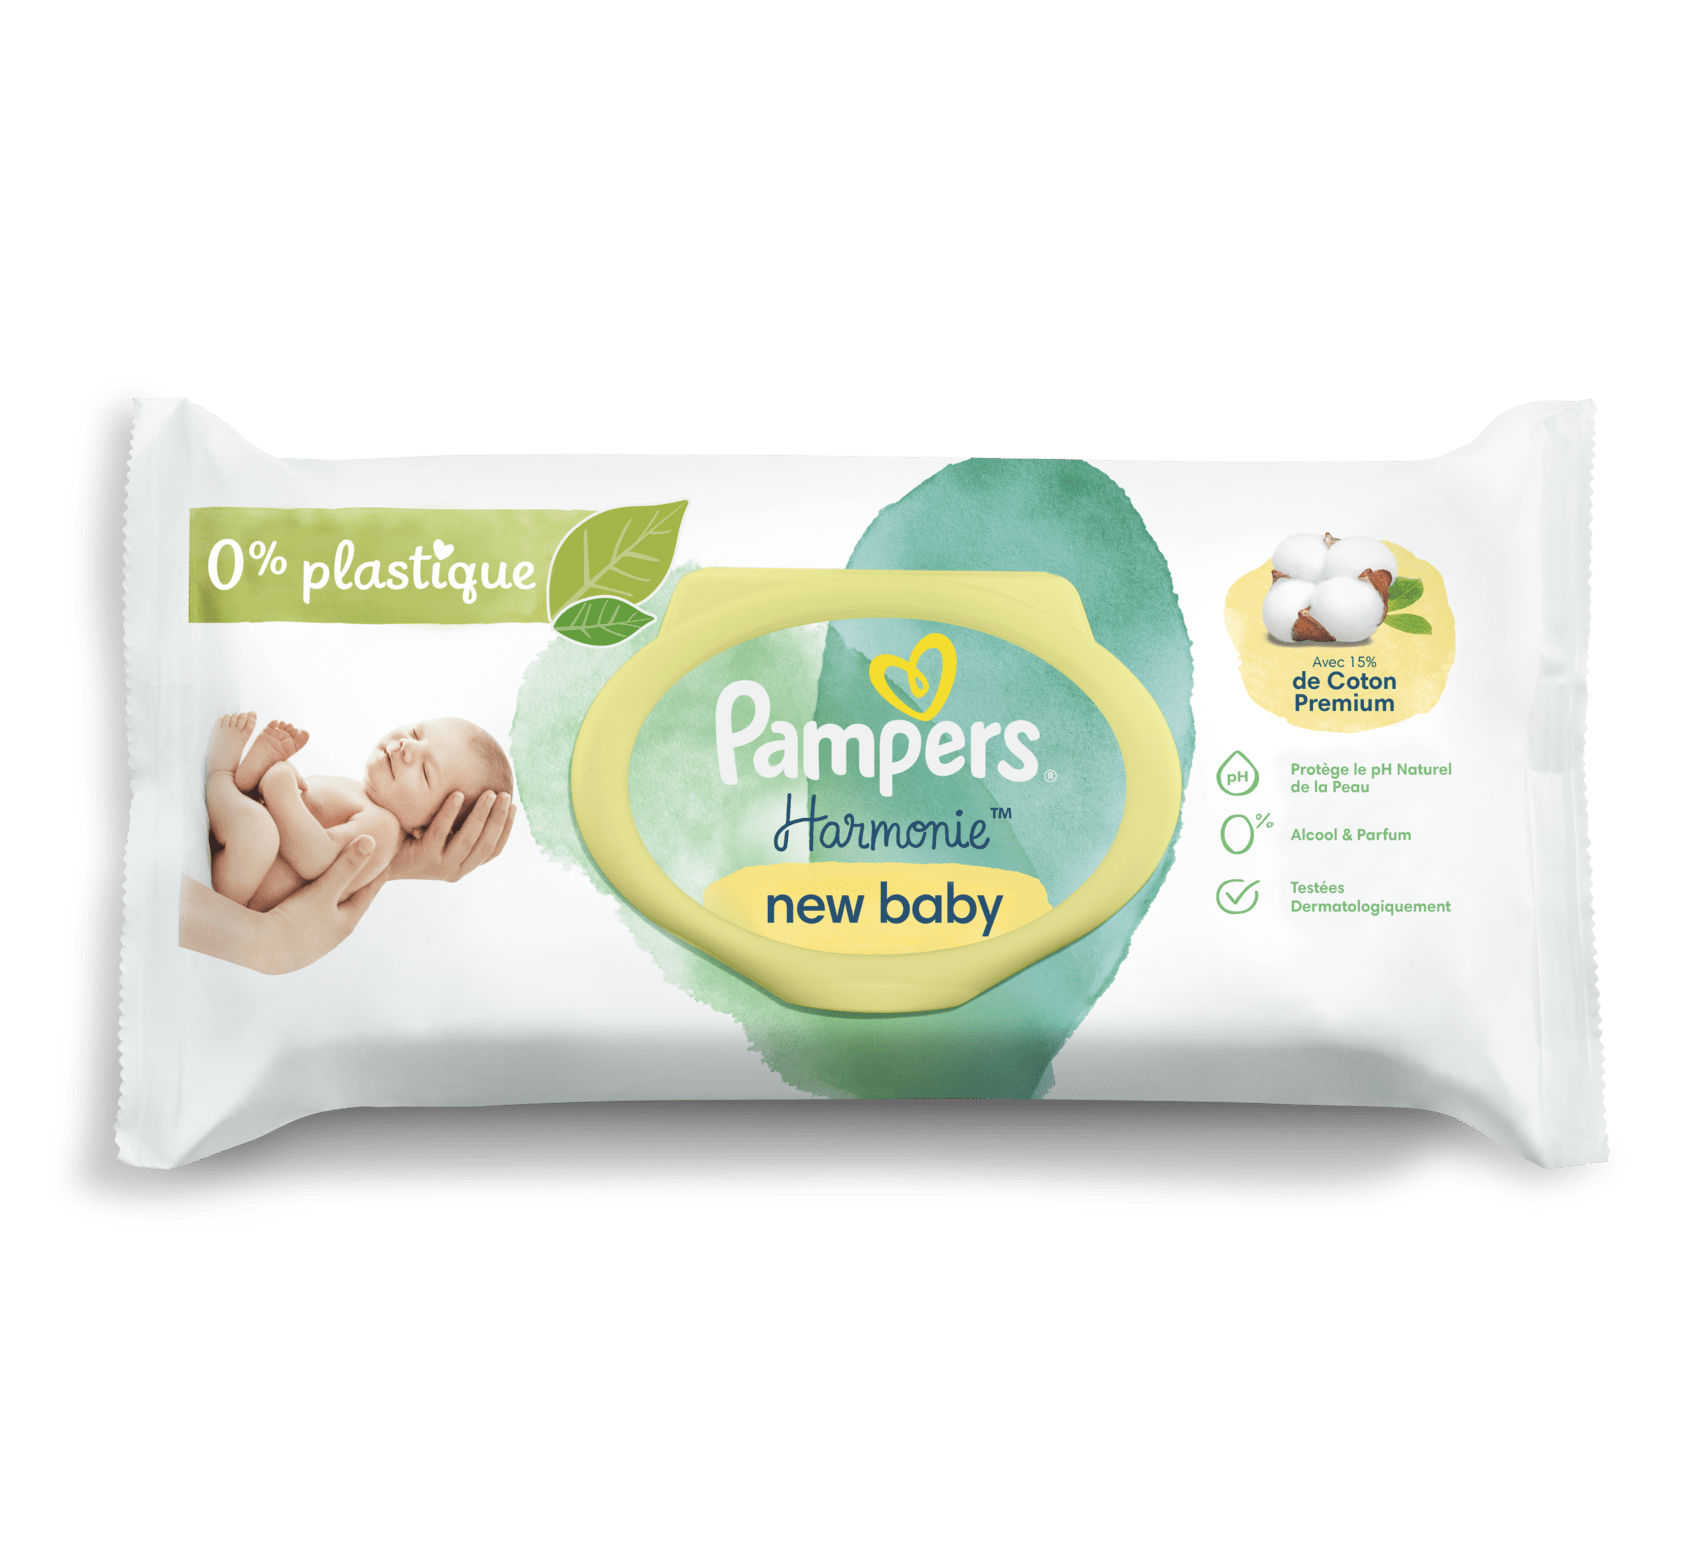 Lingettes Pampers® Harmonie New Baby